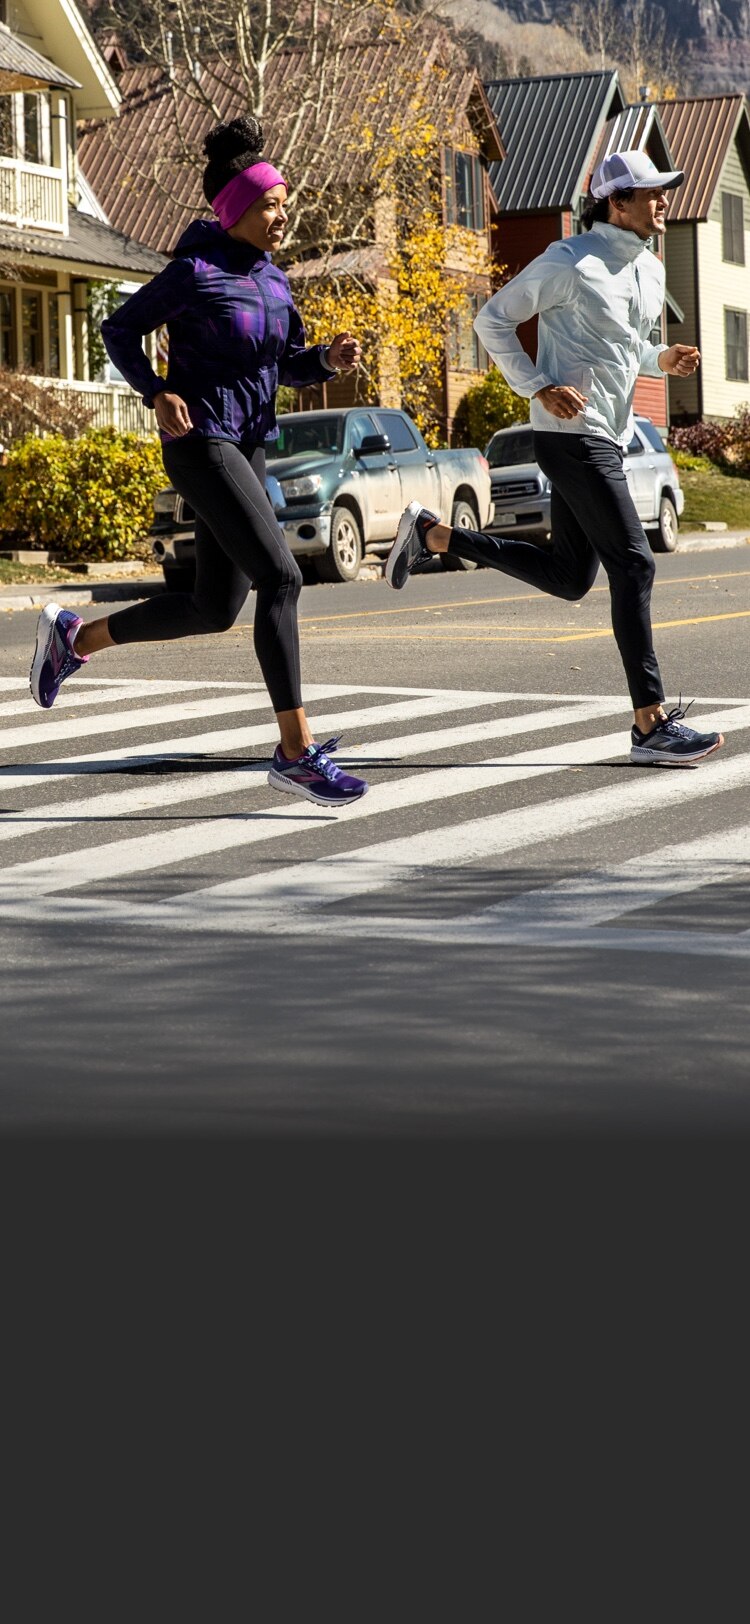 Deux runners qui traversent une rue en courant